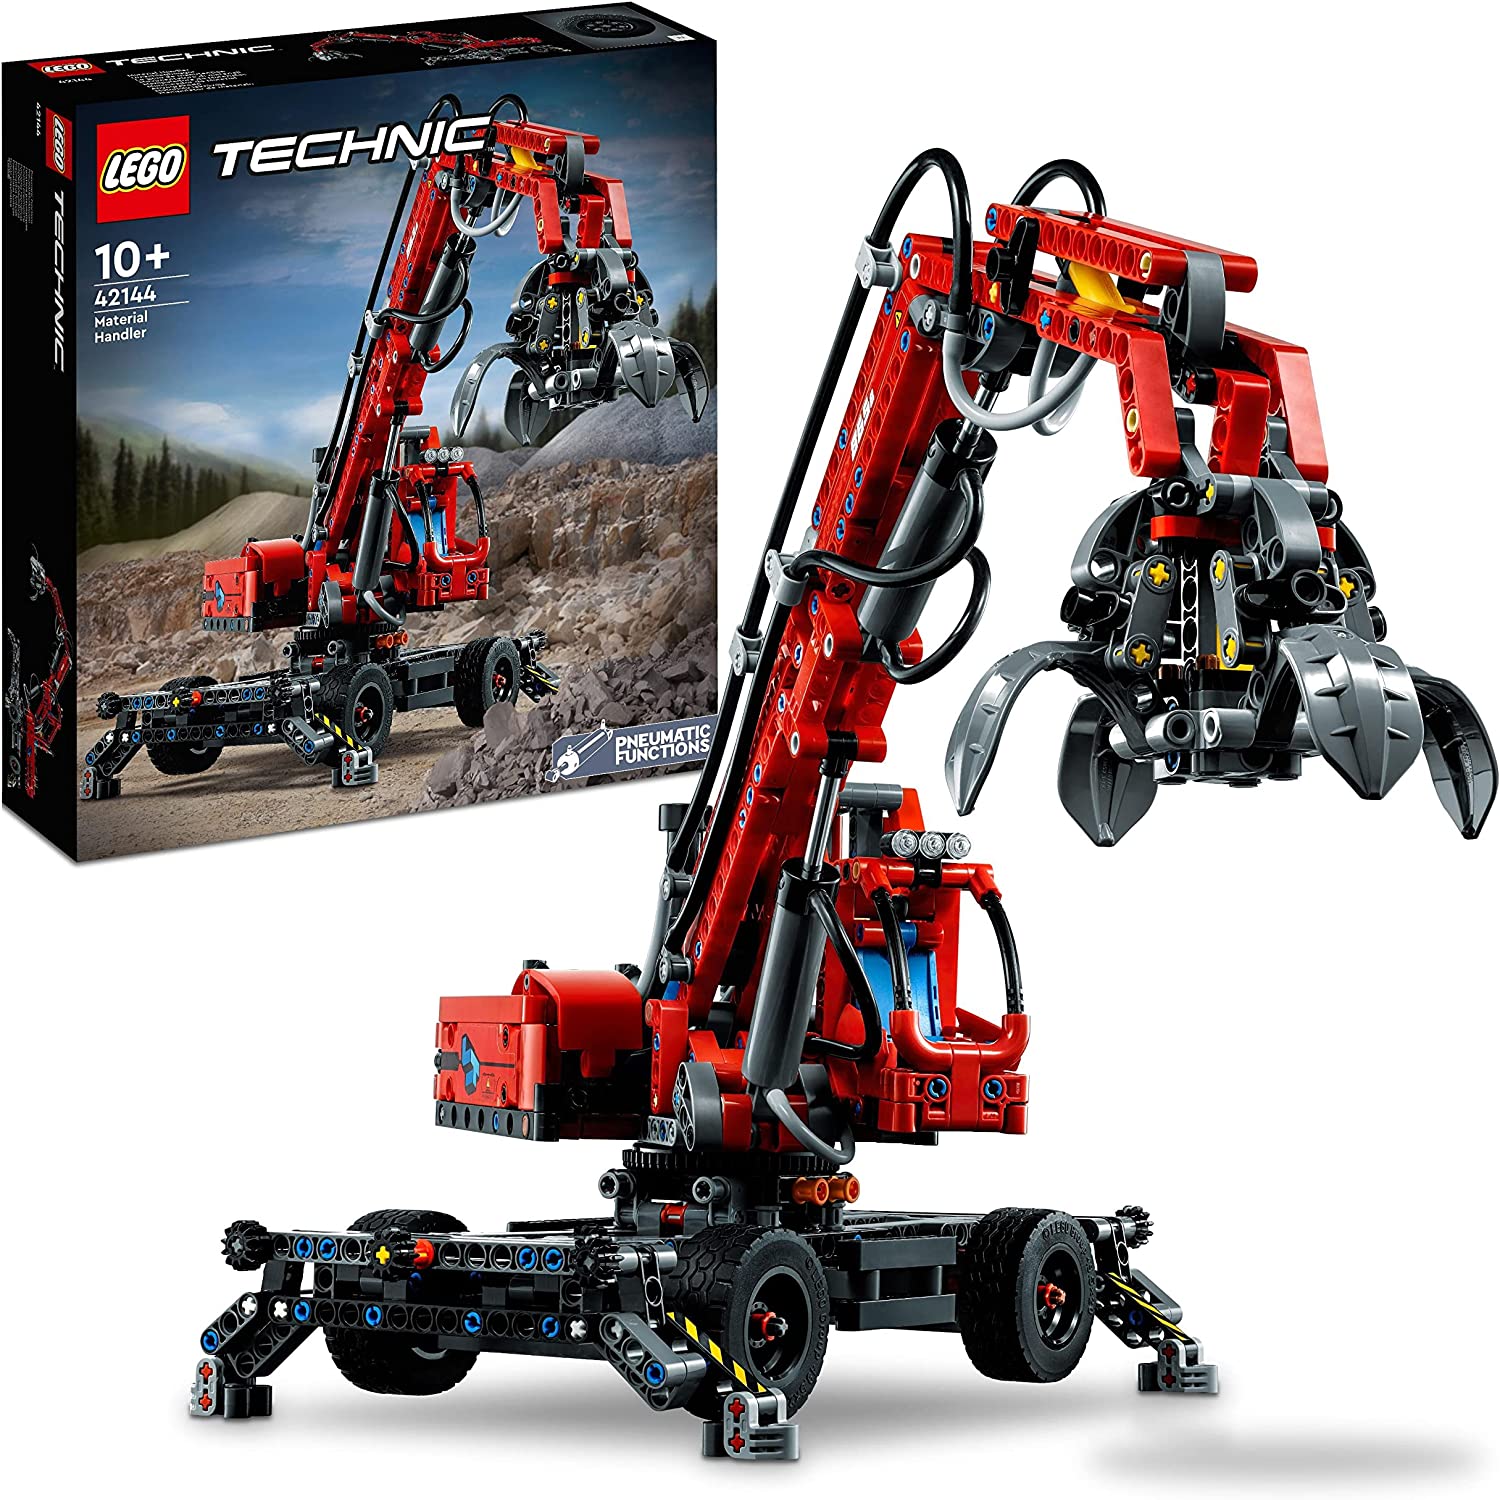 LEGO 42144 Technic Envelope Excavator Model, Mechanical Toy Set, Manual and Pneumatic Functions, Construction Vehicle Crane, Educational Toy